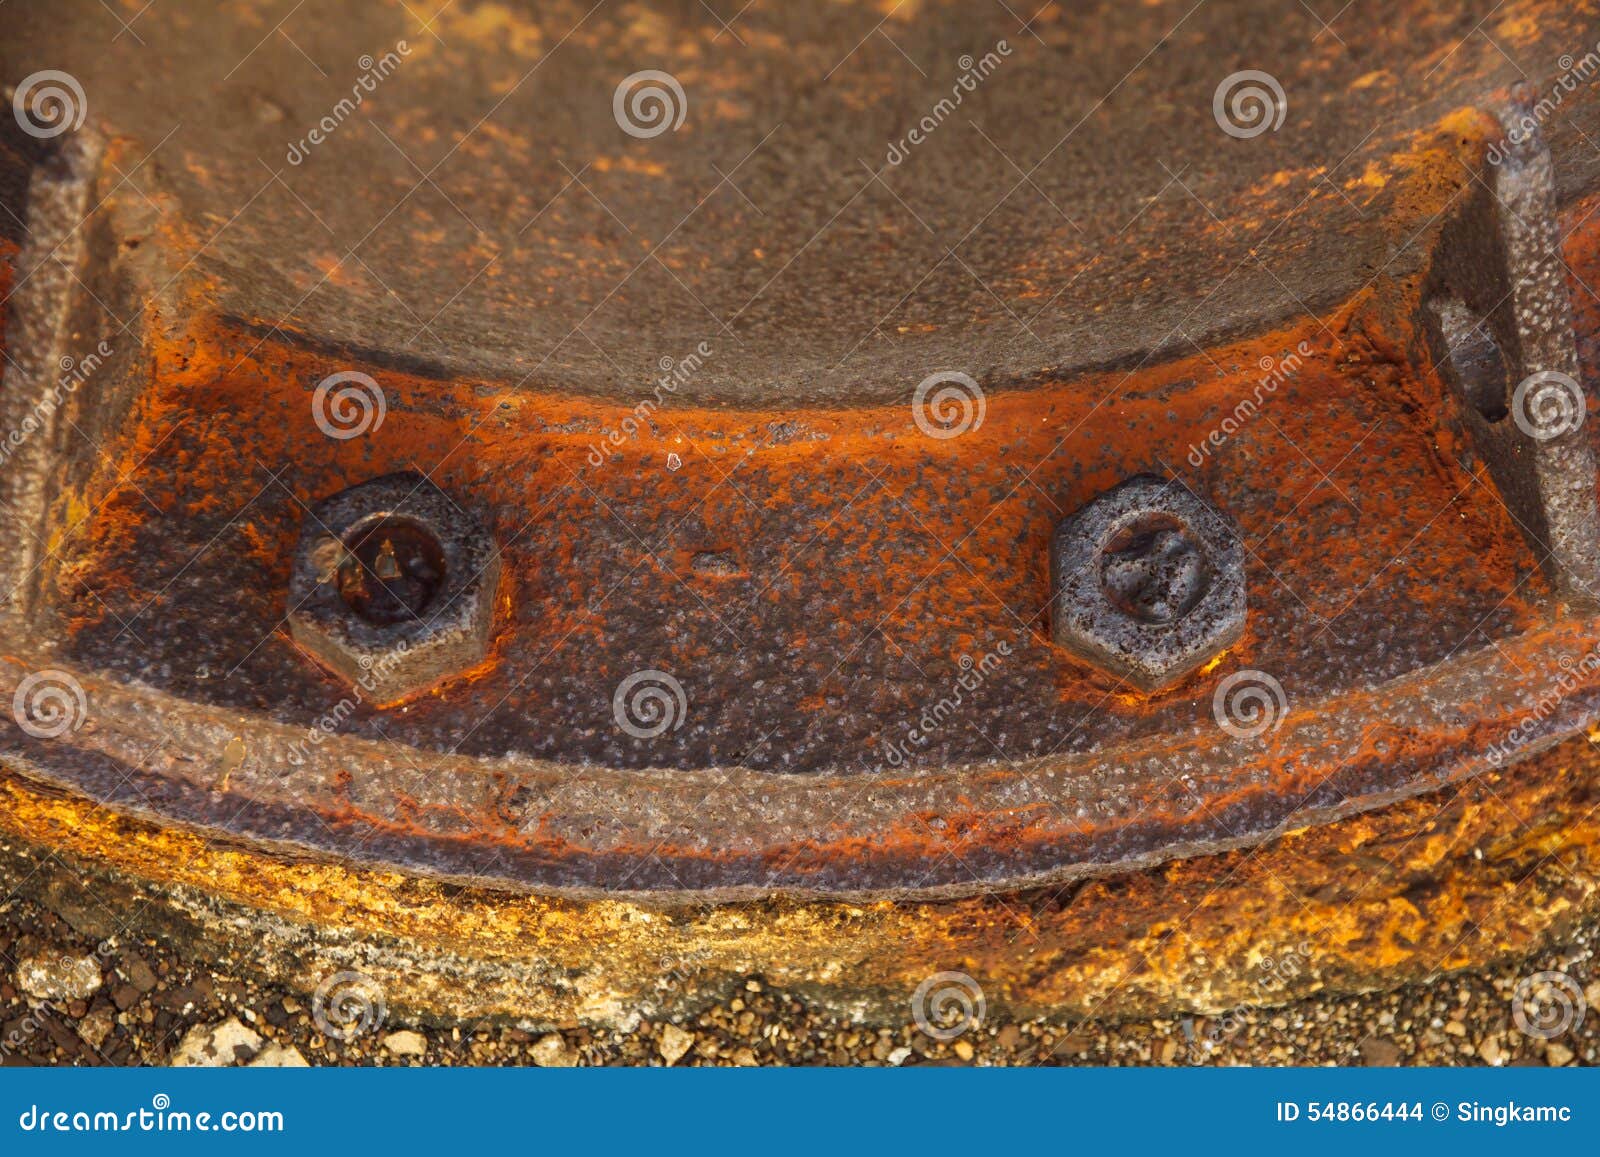 Can metal rust in water фото 36